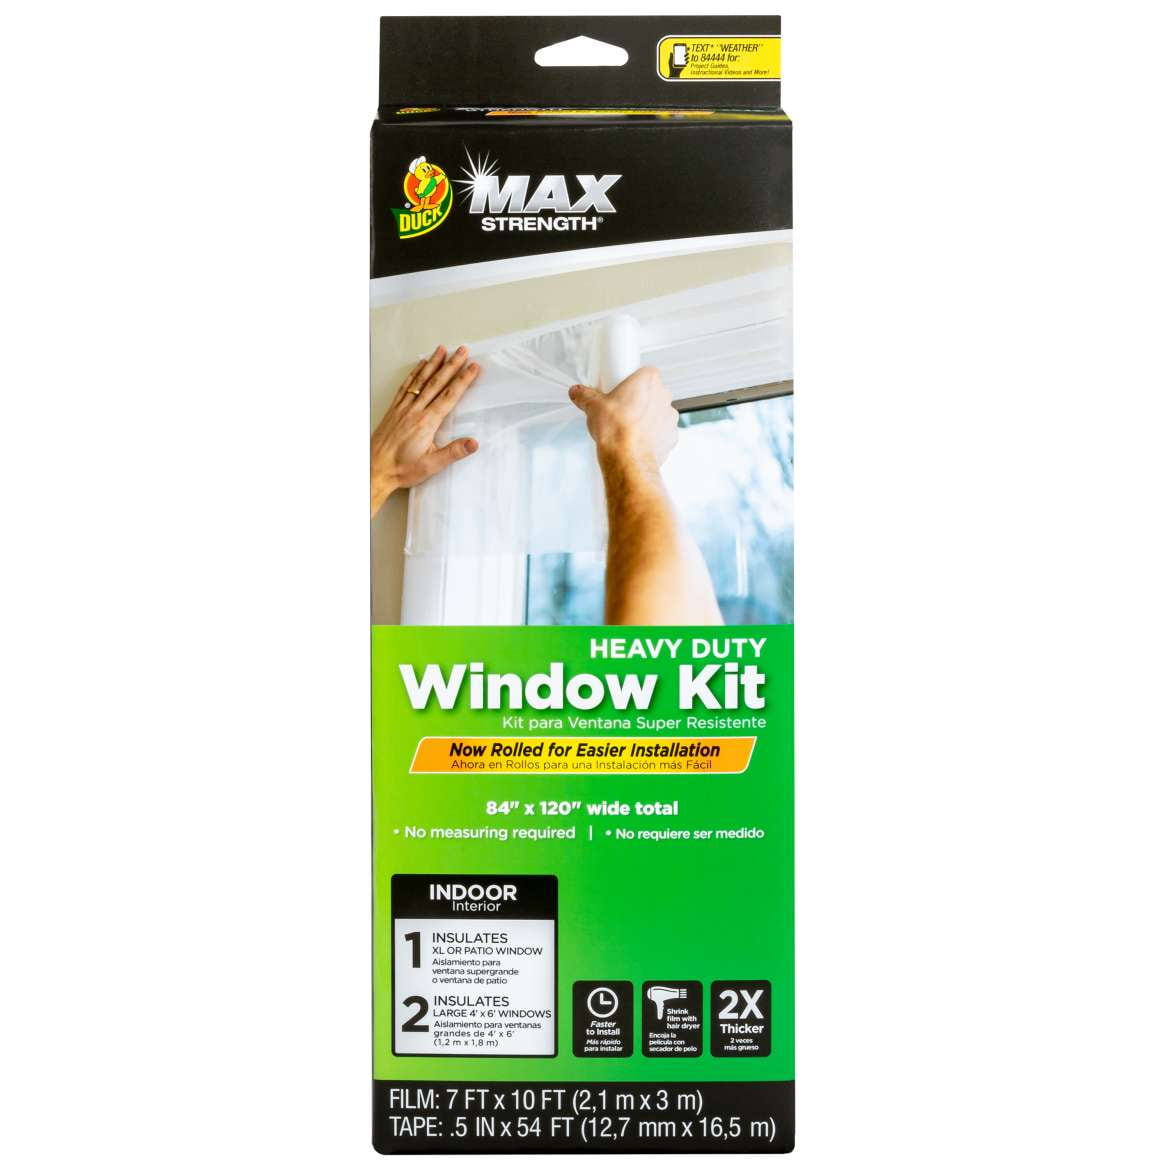 NEW Duck Max Strength Roll-On Window Insulation Kits Heavy Duty Film 62" x 120"